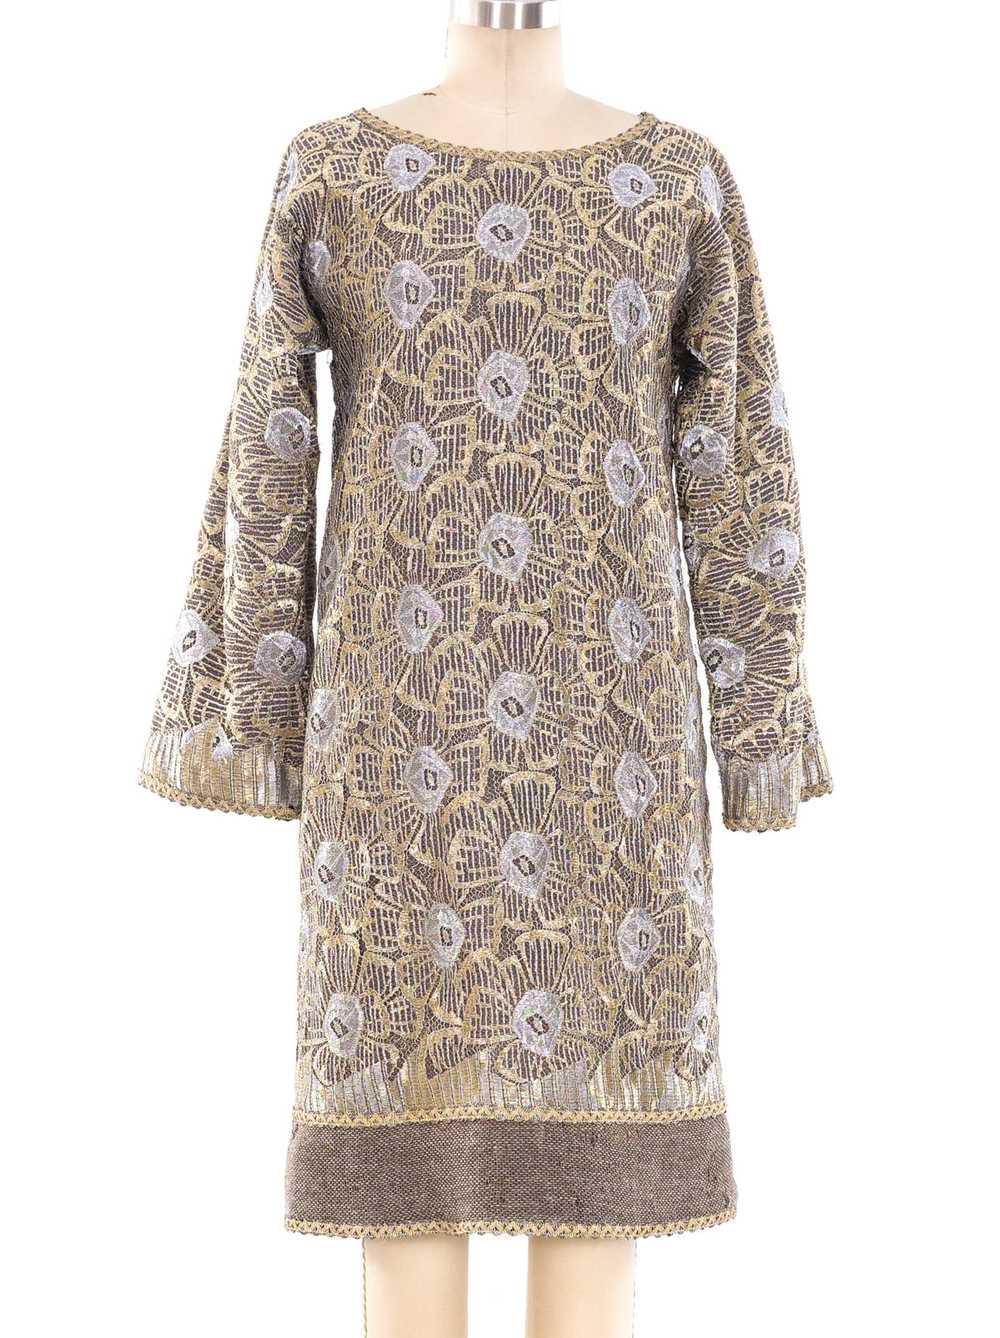 Geoffrey Beene Metallic Floral Embroidered Dress - image 1